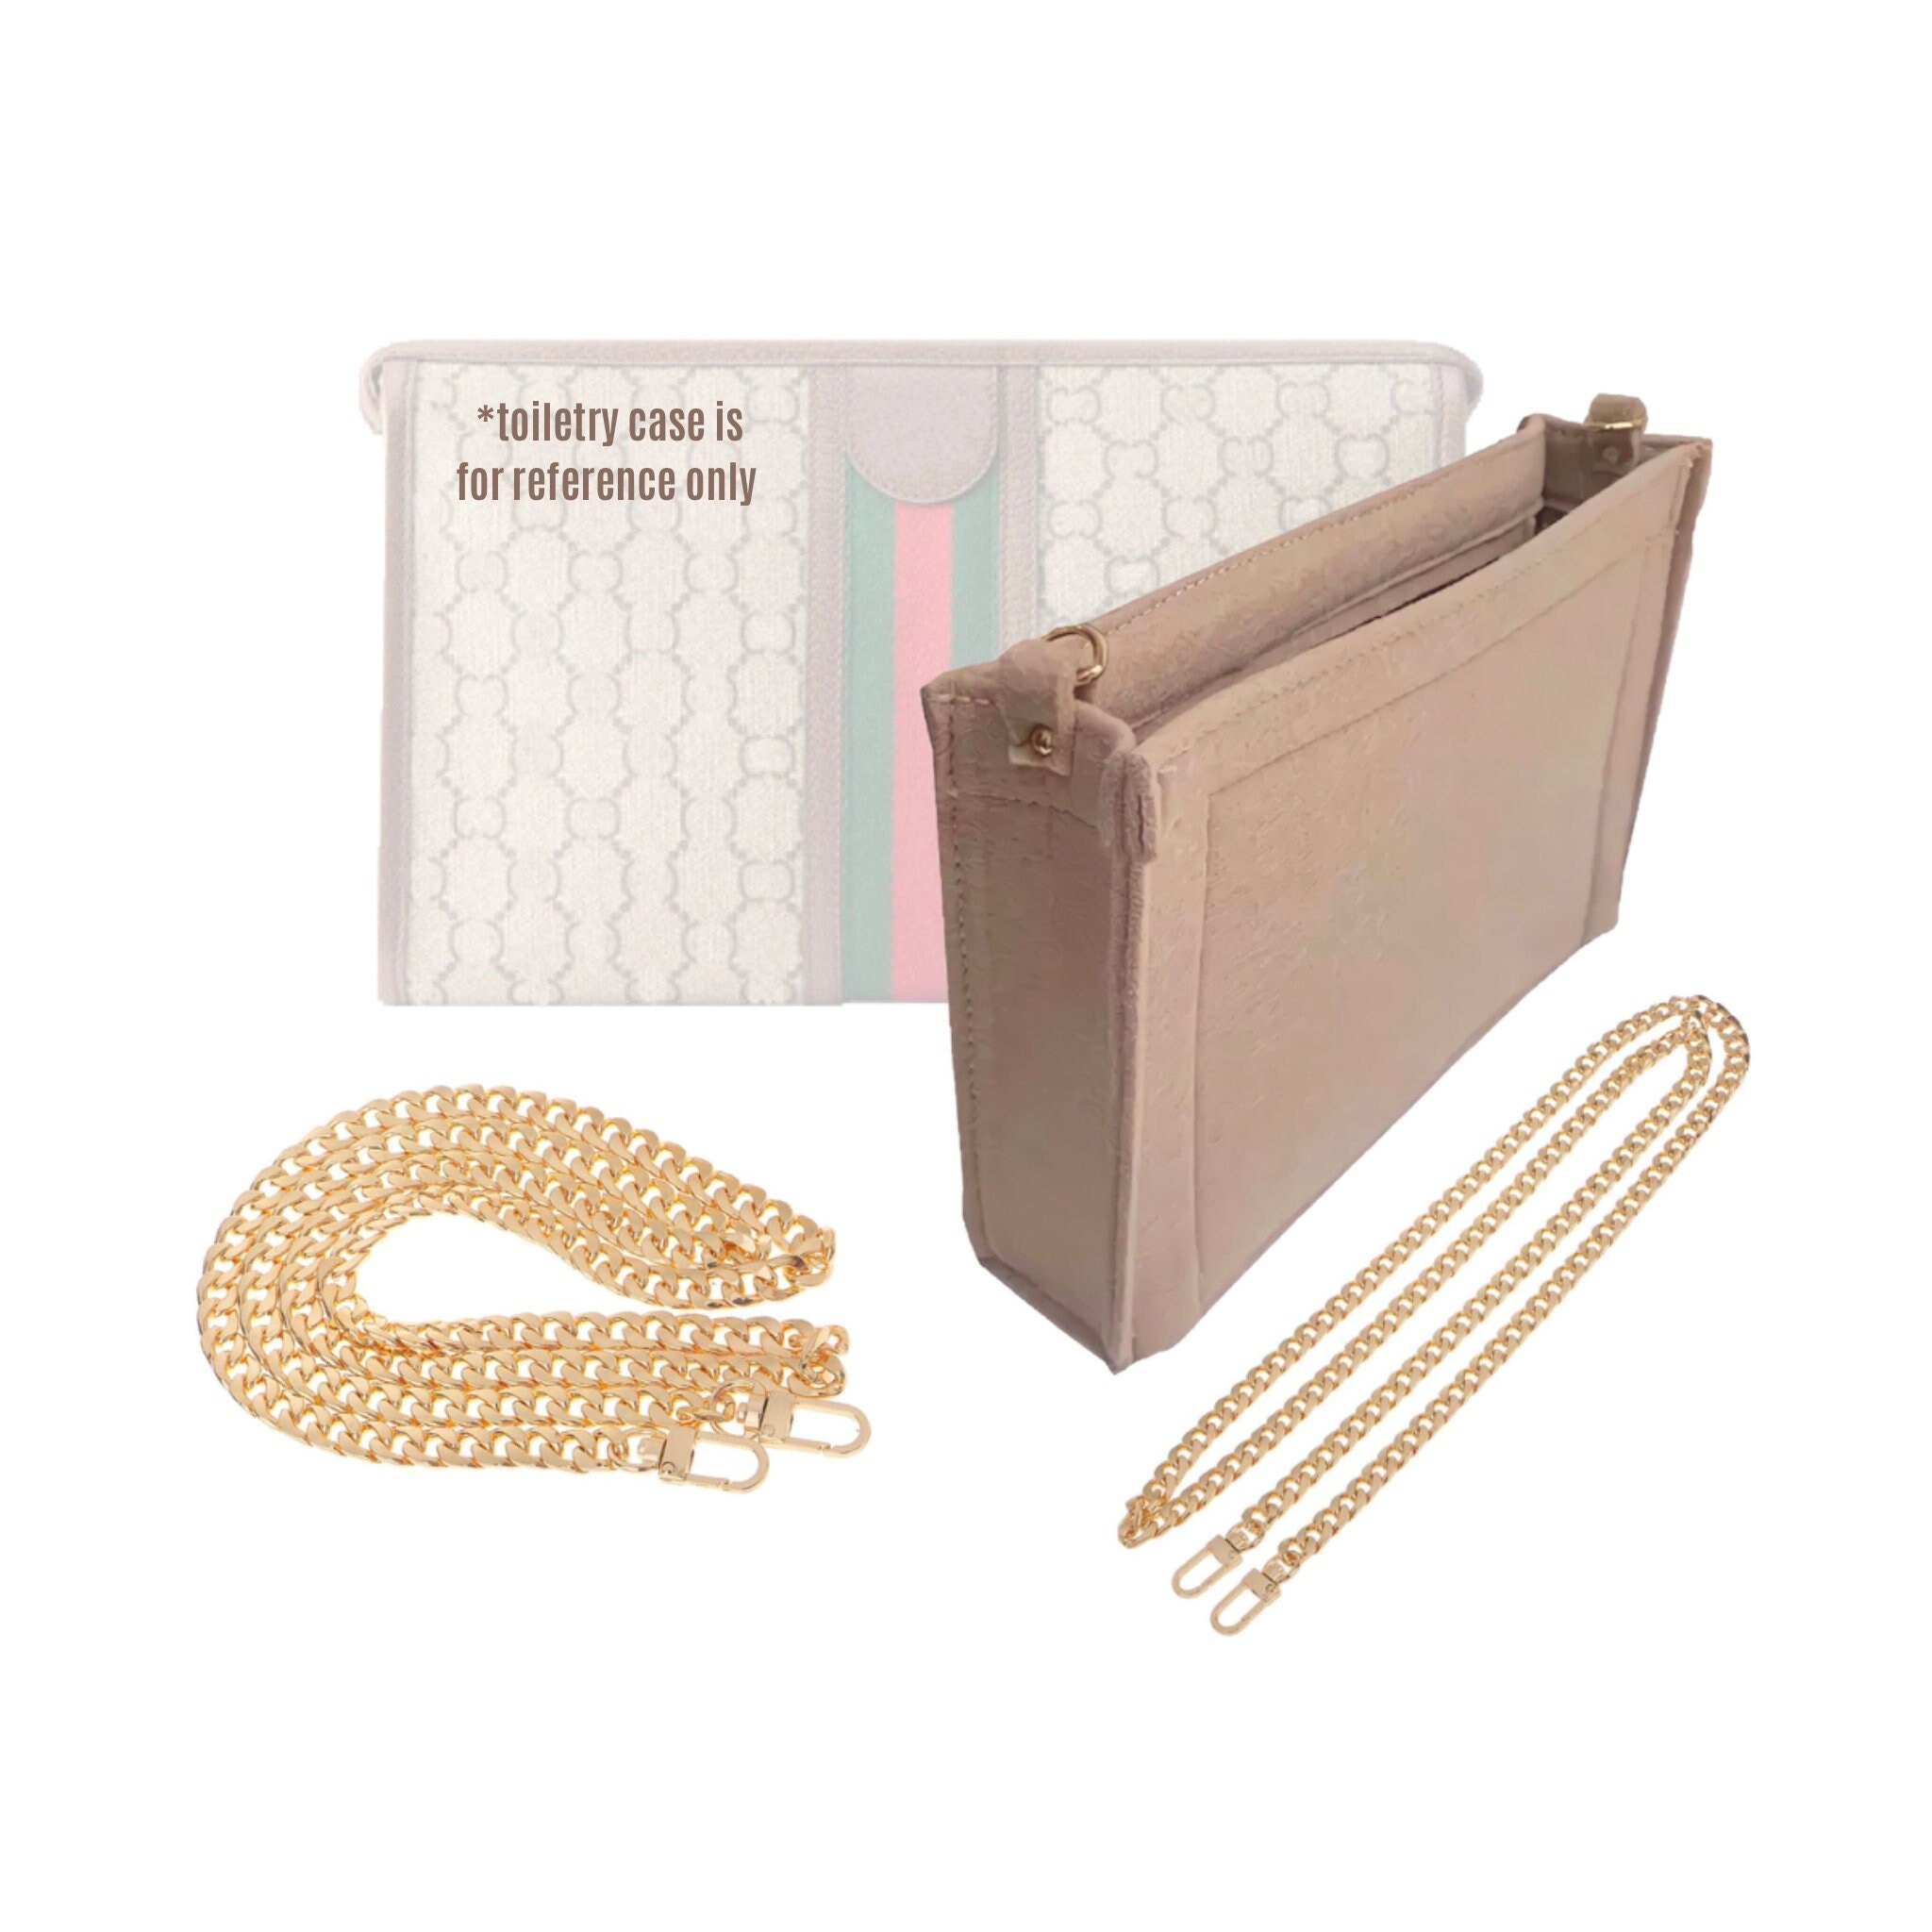 Louis Vuitton Monogram Toiletry Bag 25 - Brown Cosmetic Bags, Accessories -  LOU801707